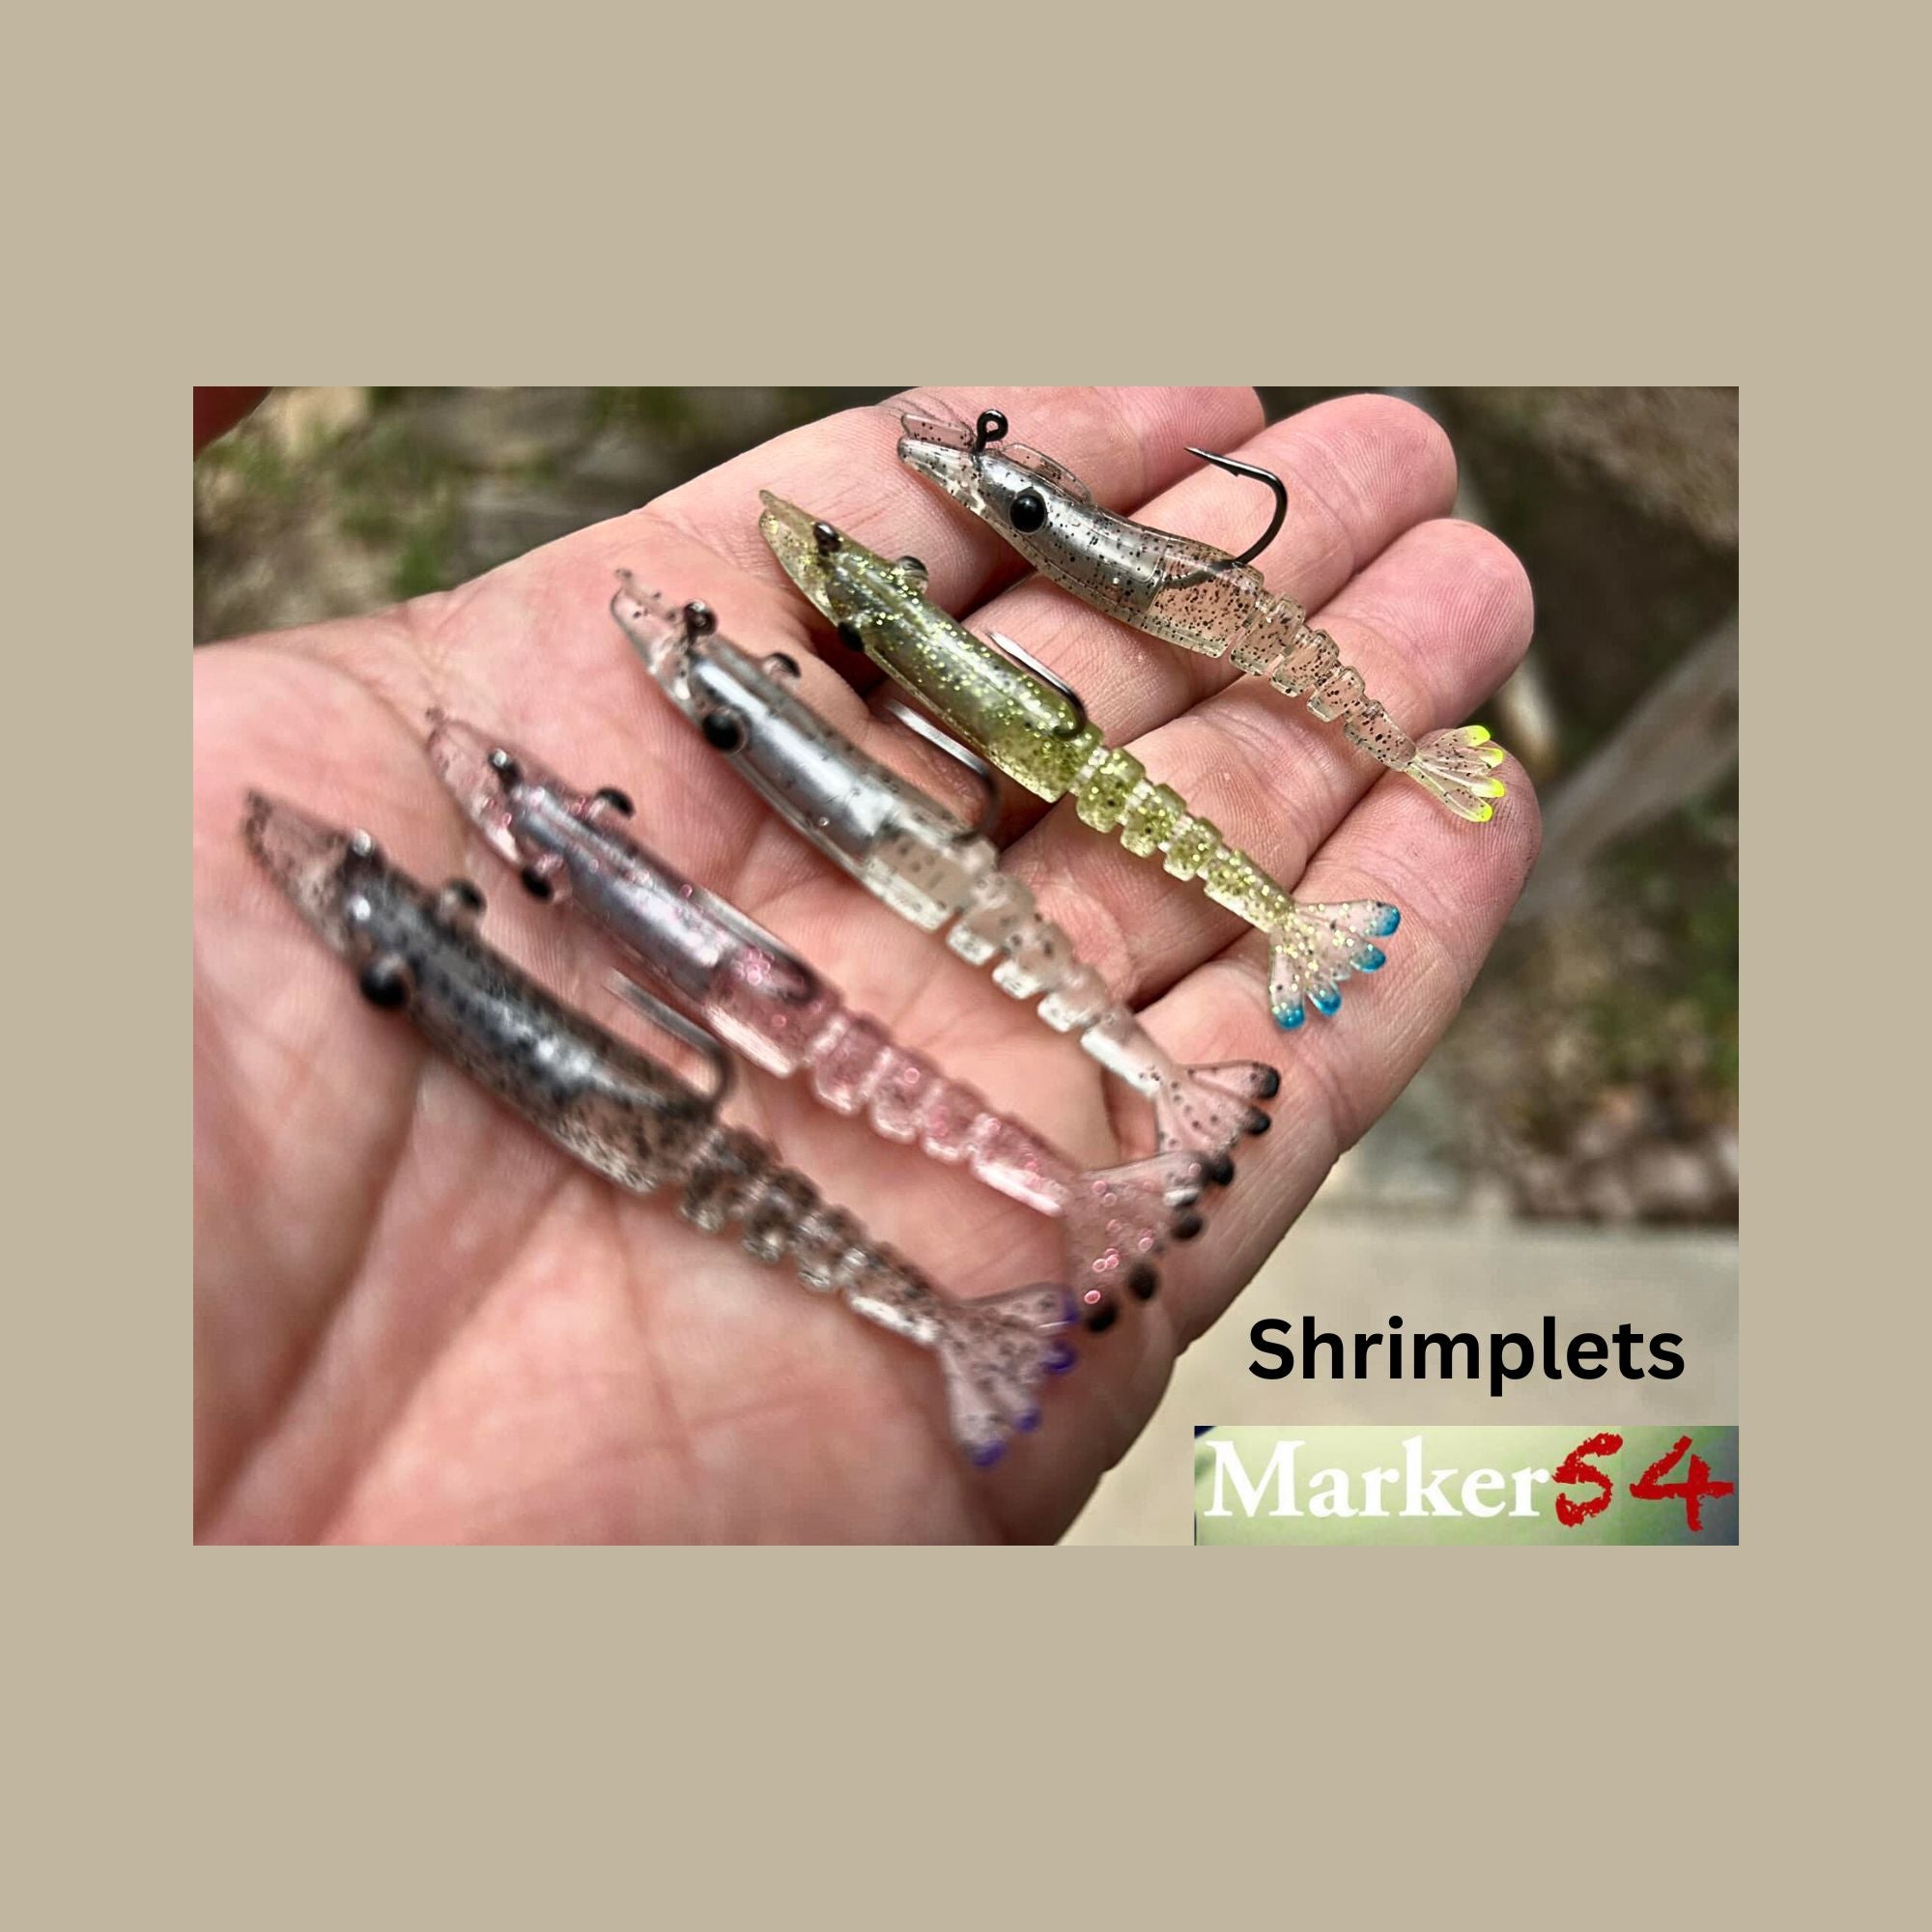 2.5 Shrimplets, Marker 54, Soft Plastic Lures, Fishing Baits